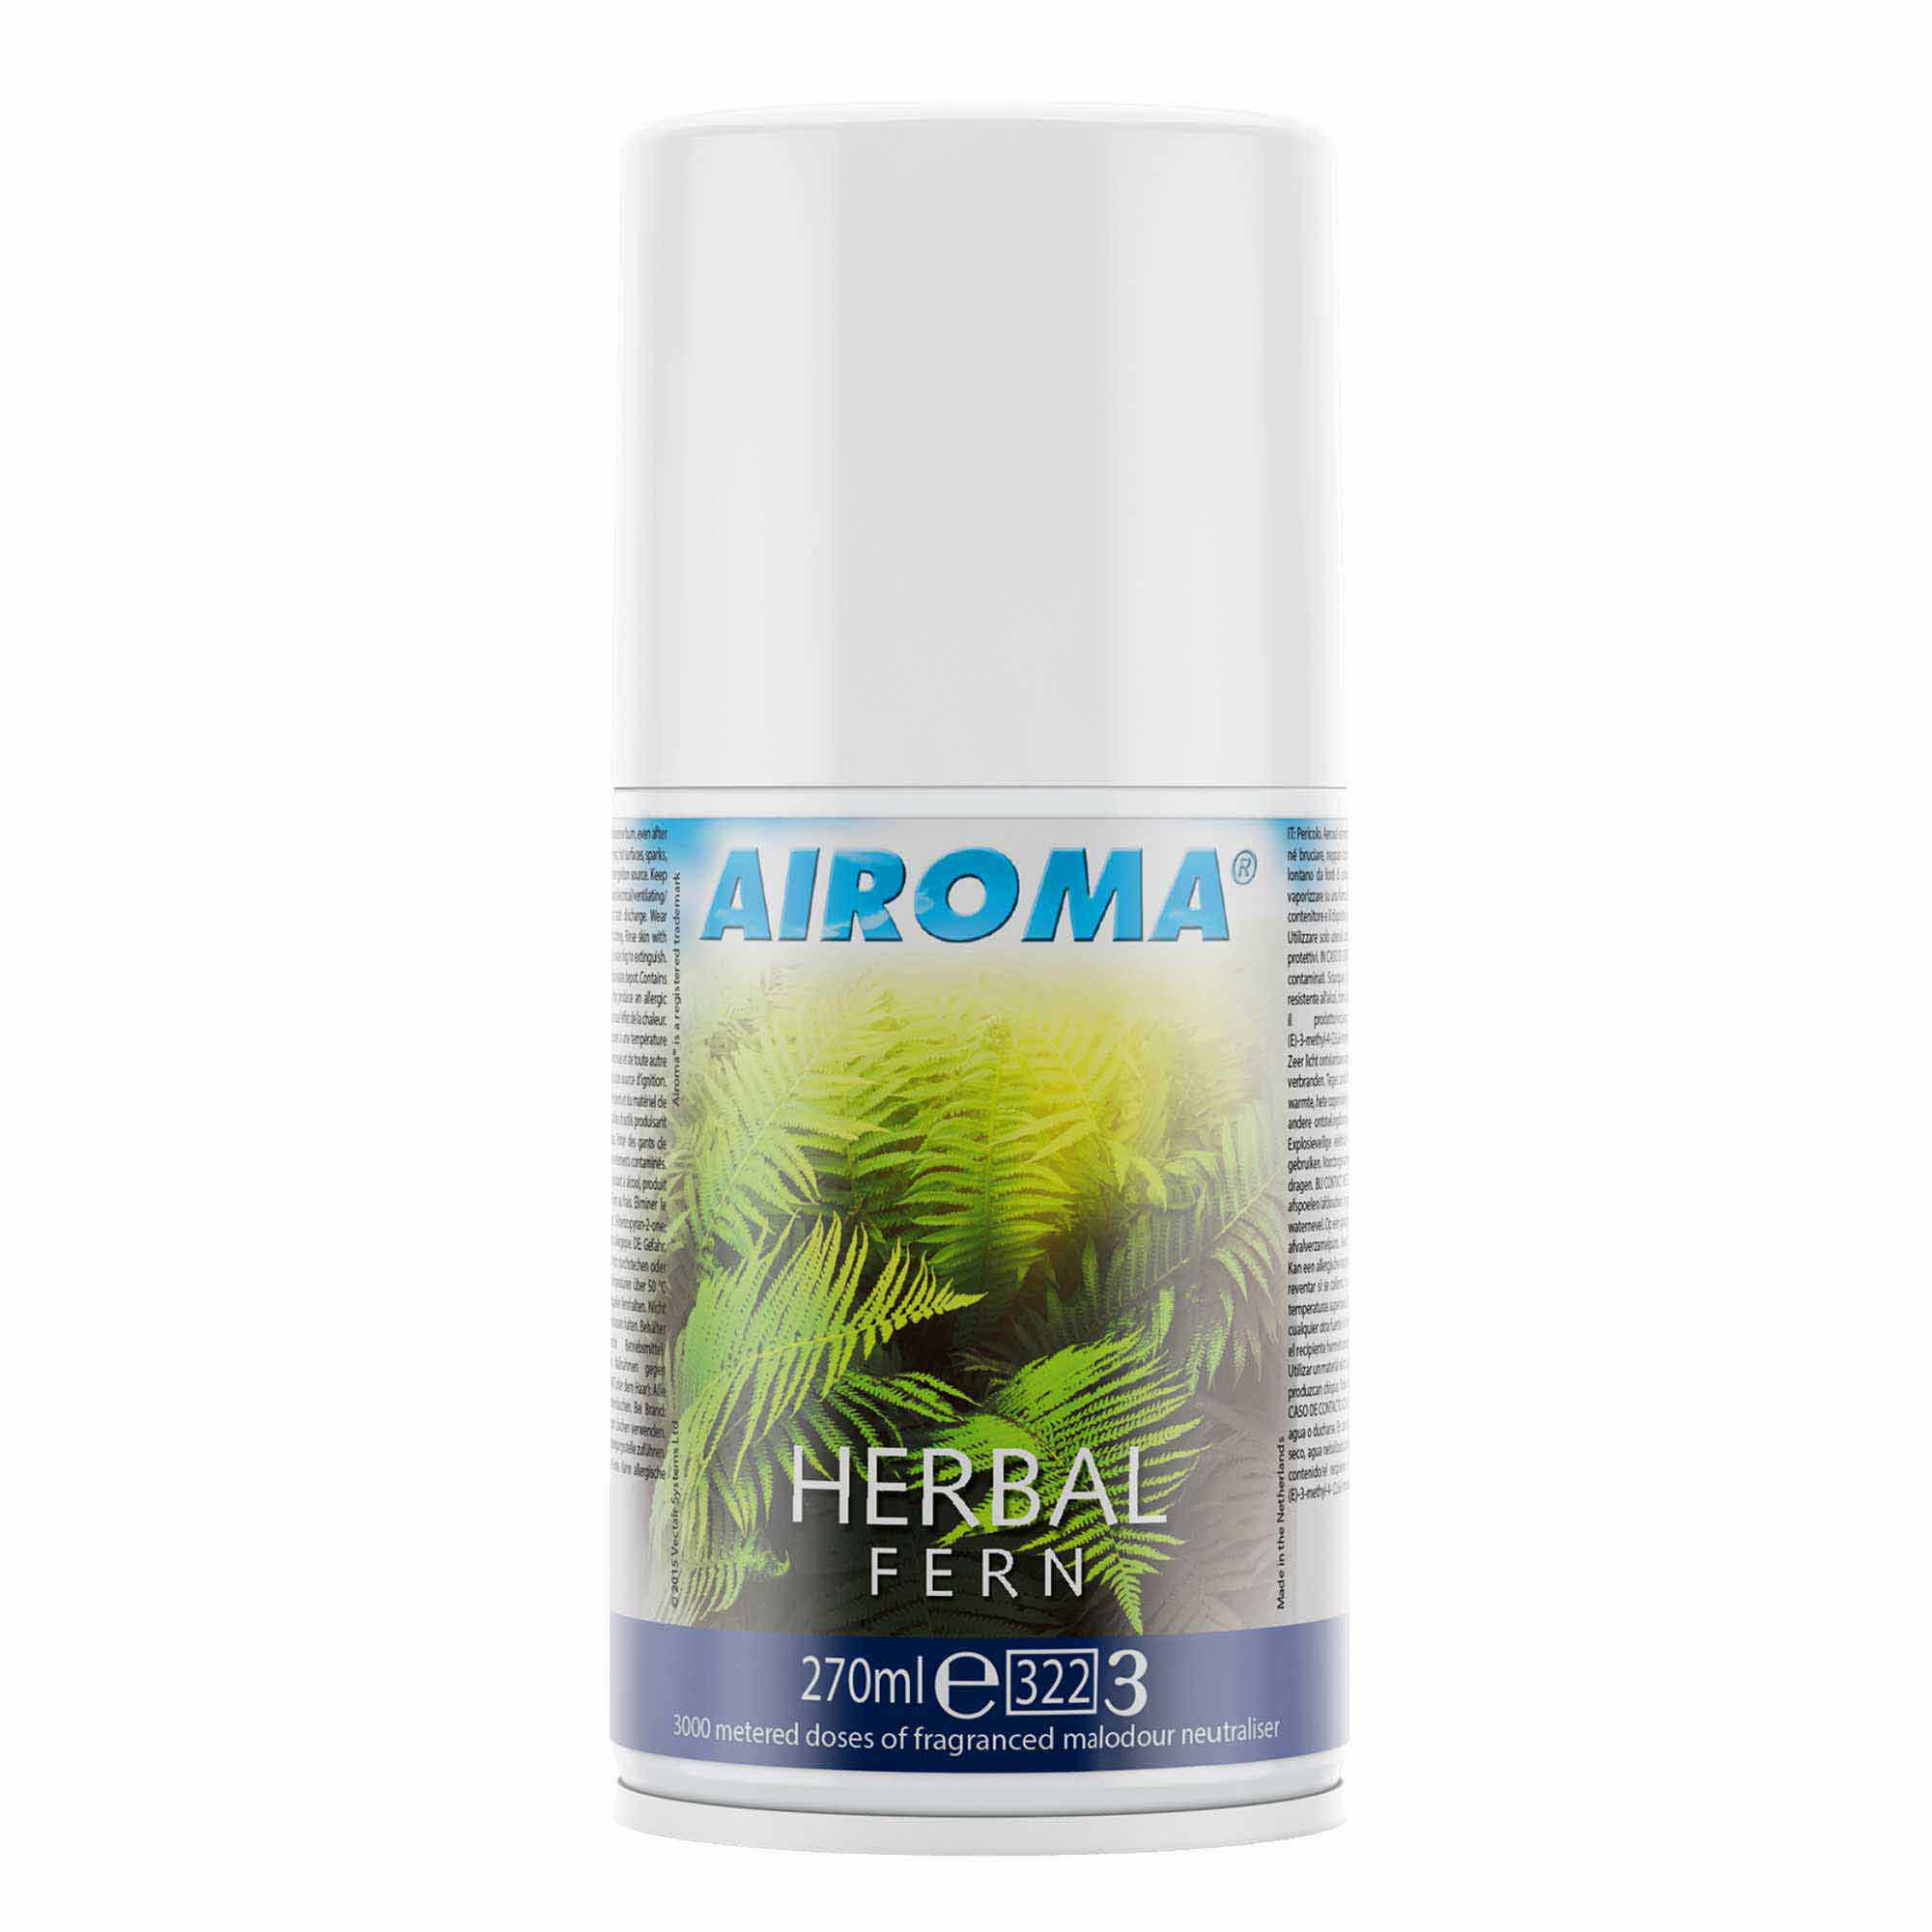 Airoma® Herbal Fern